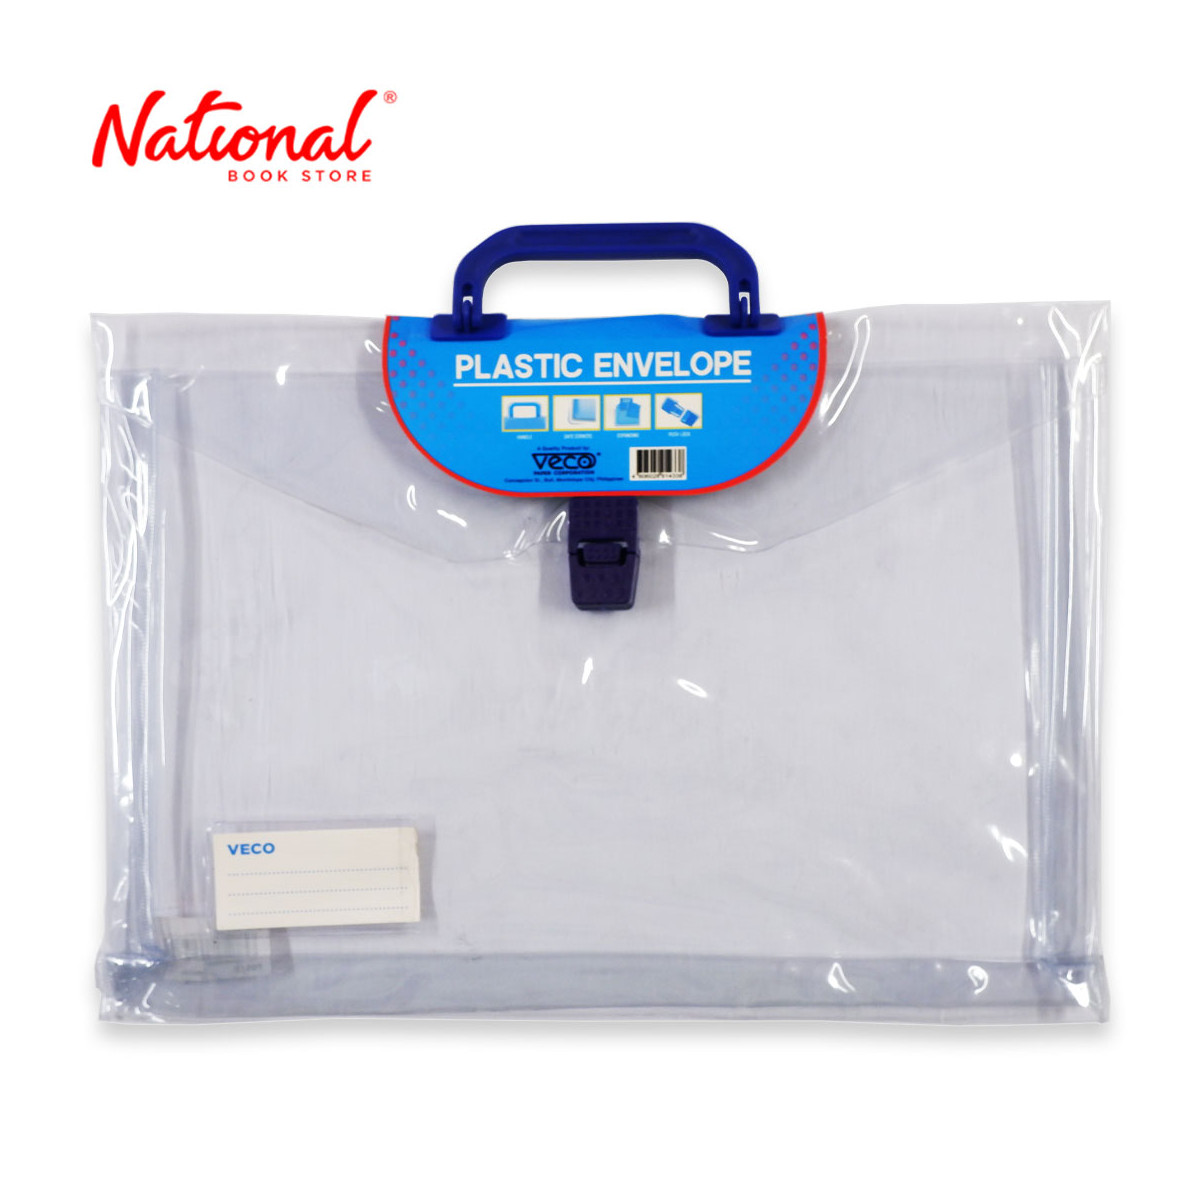 Veco Plastic Envelope with Handle Long Gauge 10 Clear Colored Handle Expandable, Blue